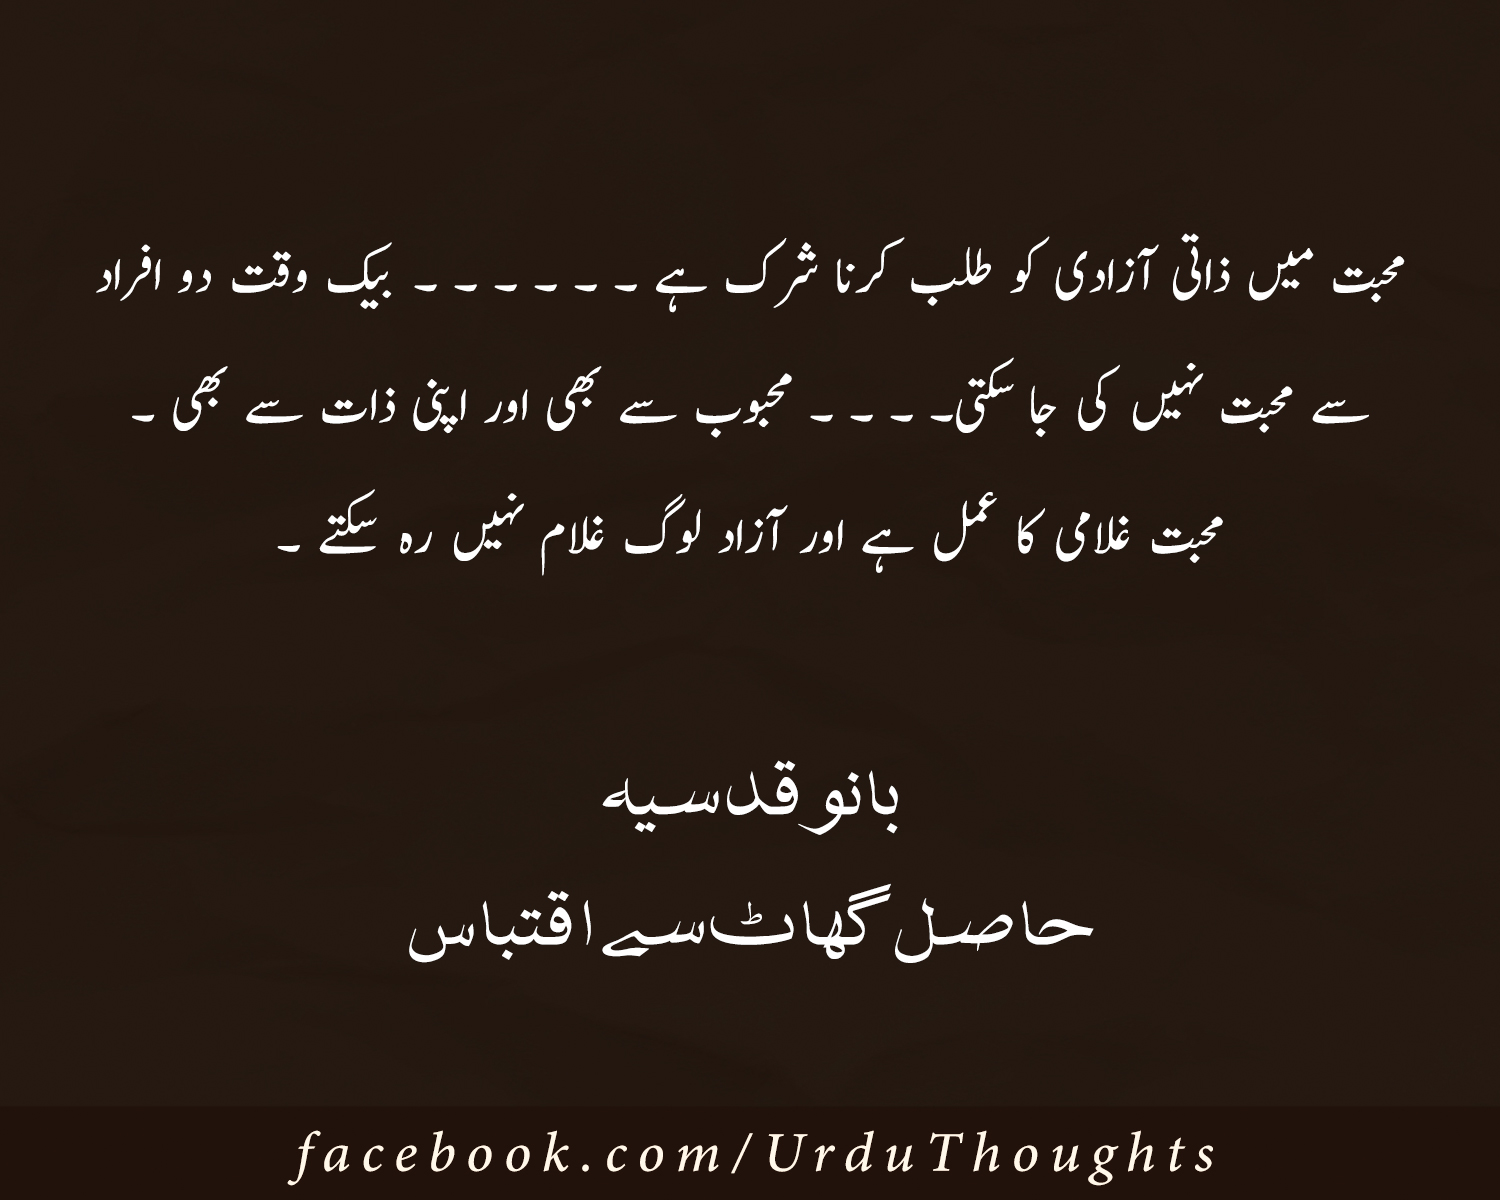 best quotes about life in urdu famous urdu quotes images urdu novels say iqtibas poetry in urdu